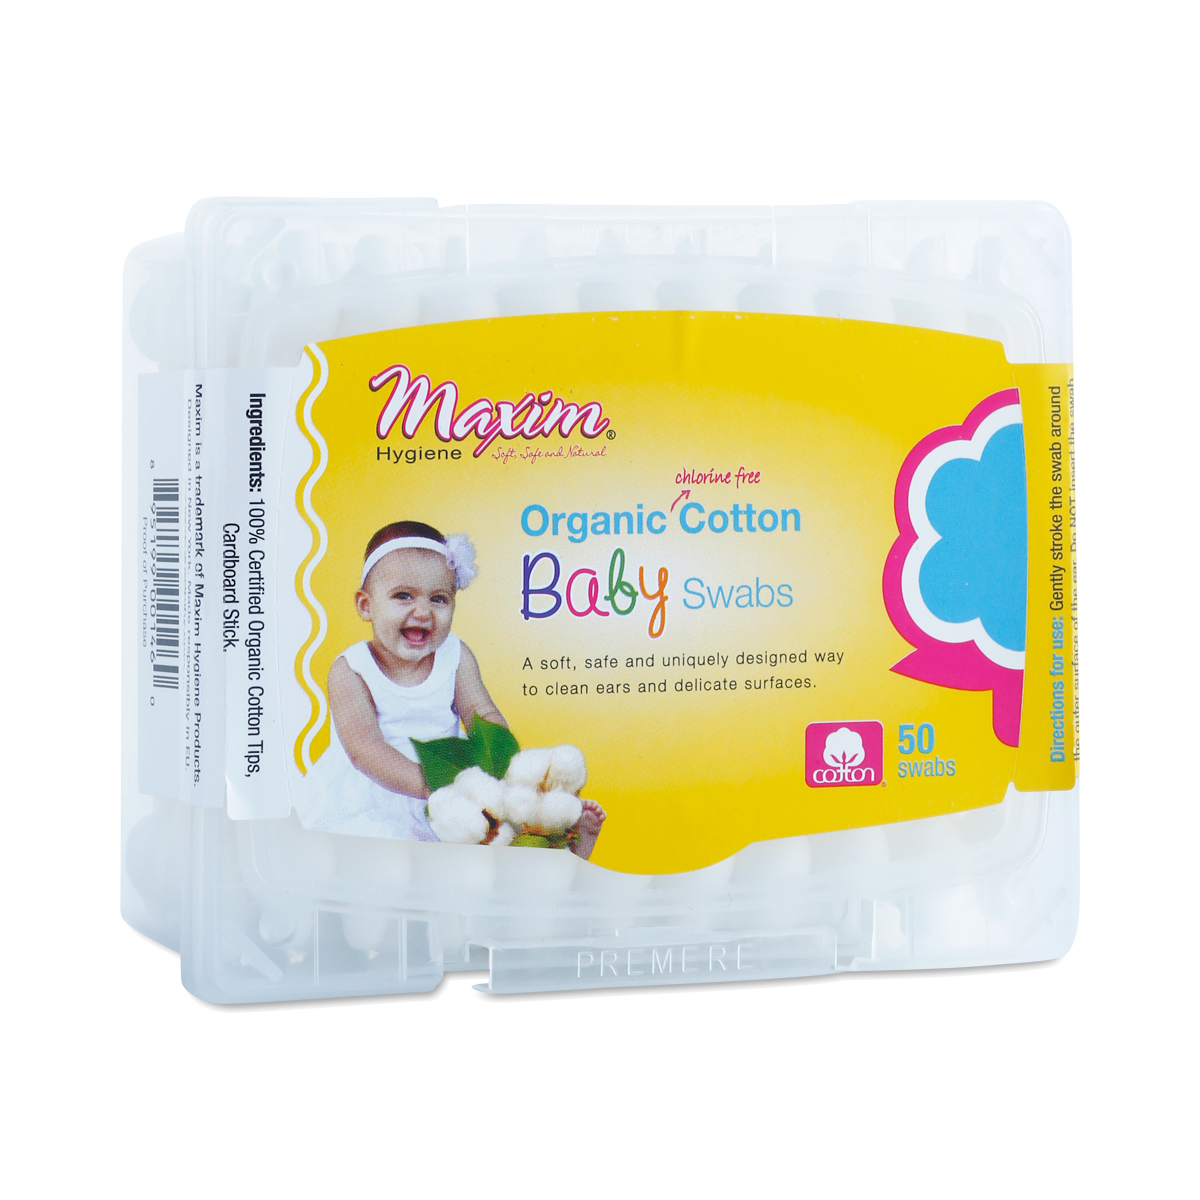 MAXIM: Organic Cotton Baby Swabs 50 ct